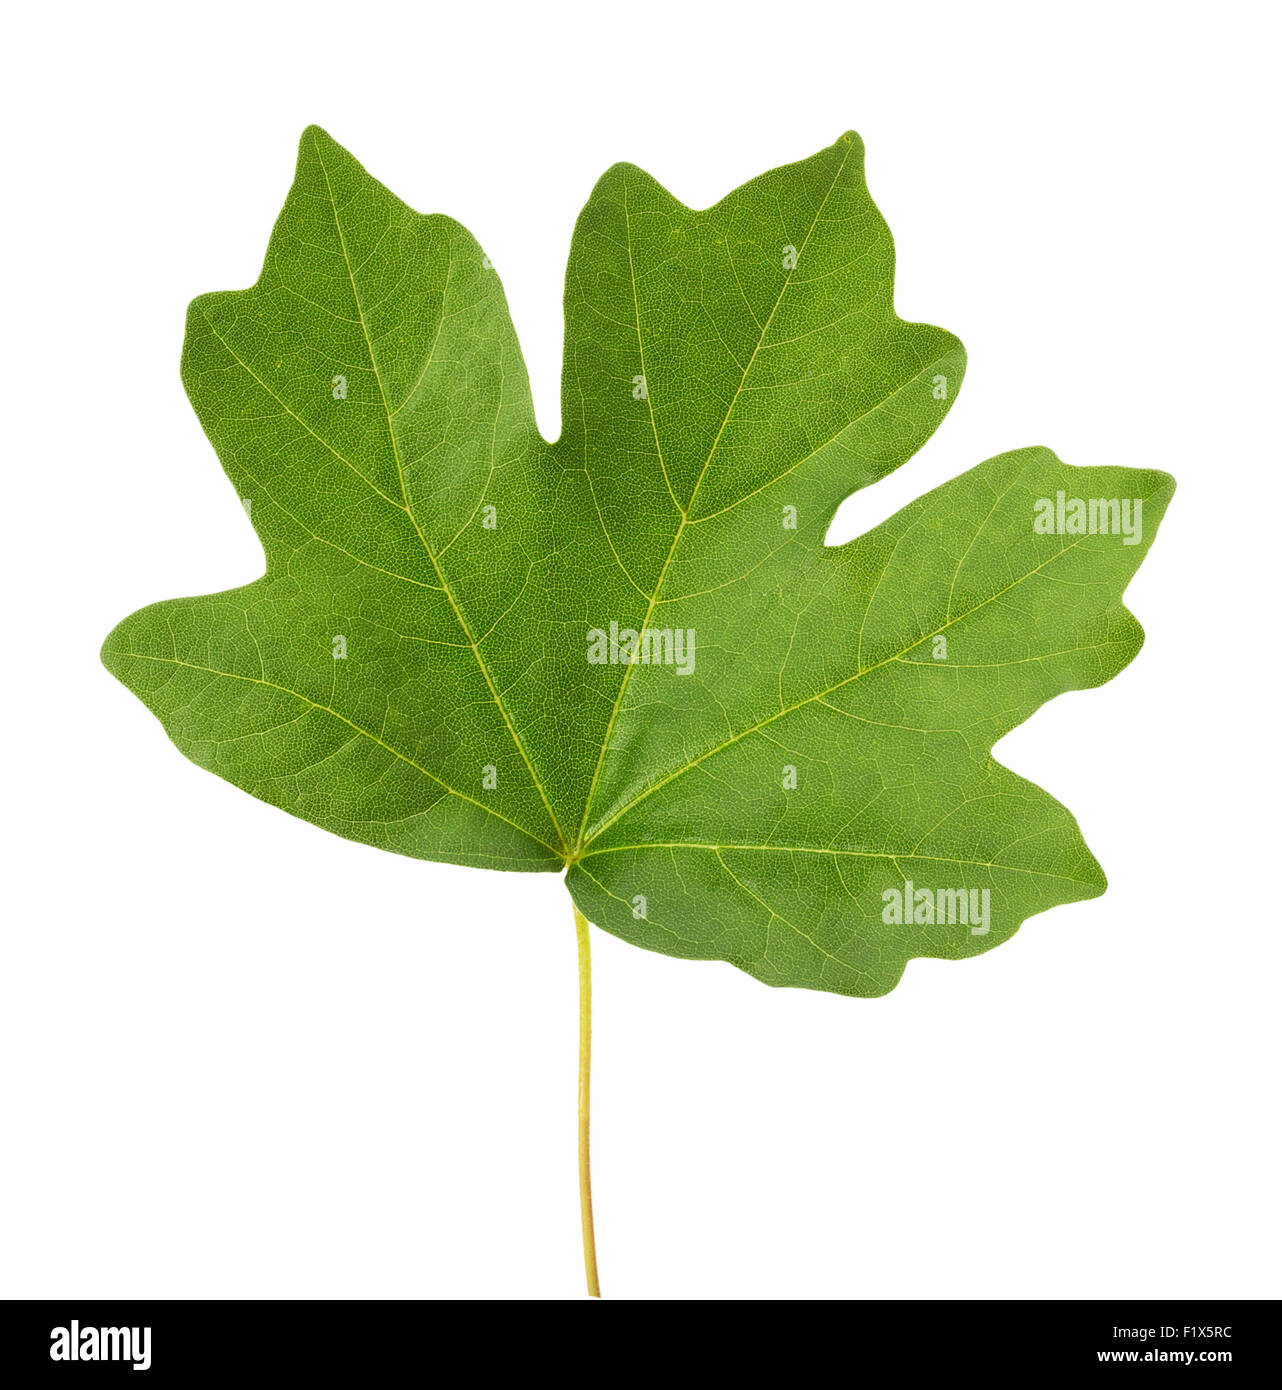 maple leaf isolated on the white background. Stock Photo